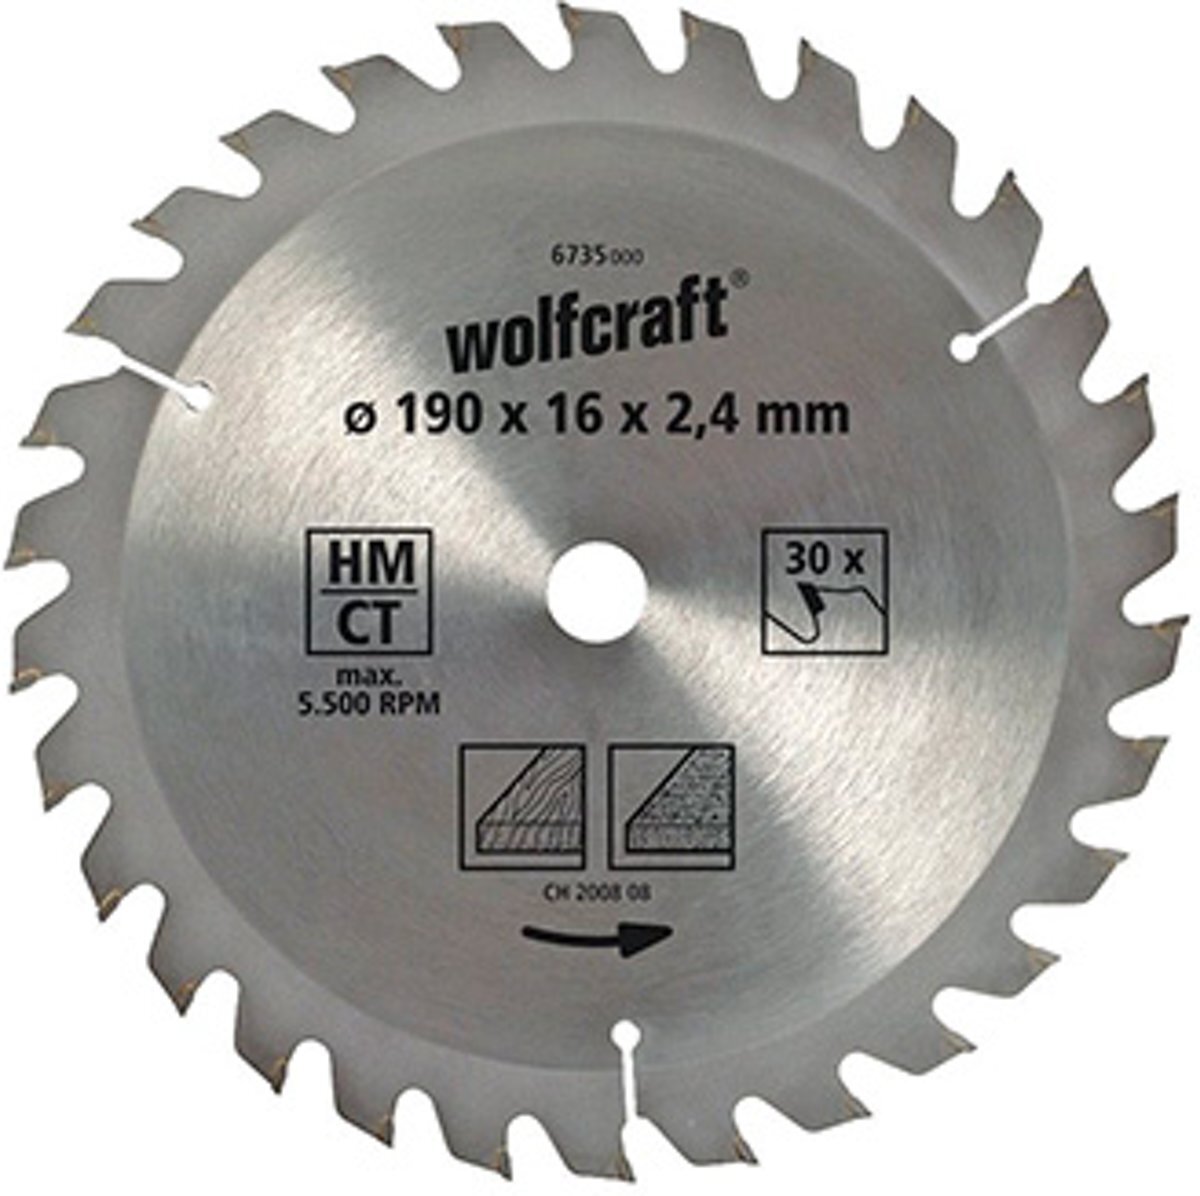 Wolfcraft 1 circular saw blade